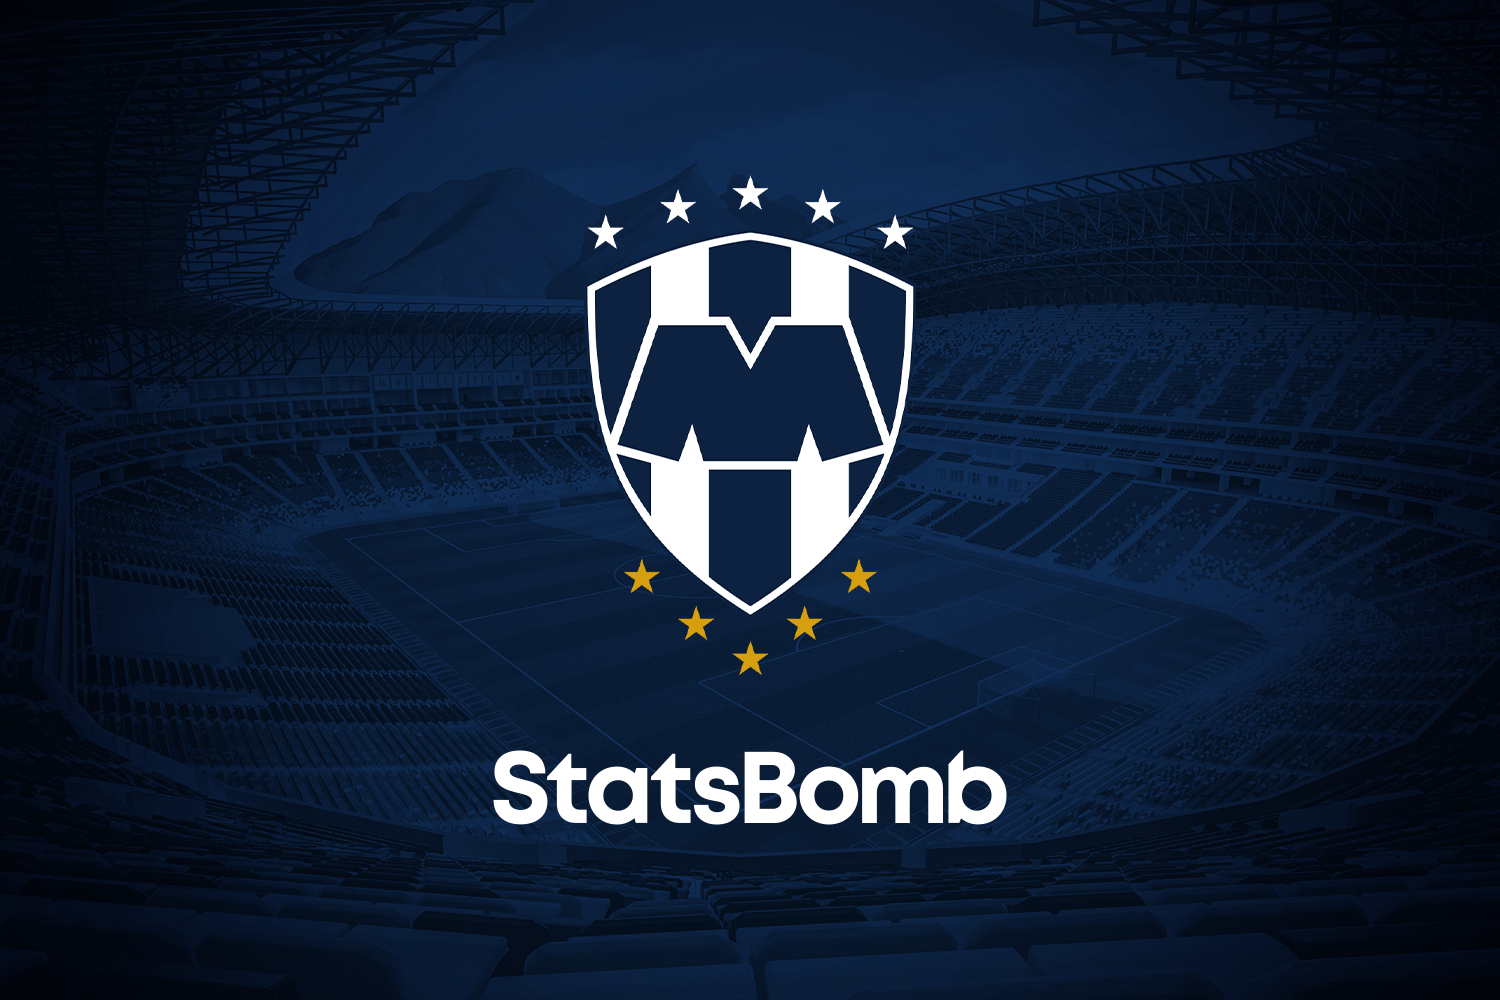 StatsBomb Announce Partnership With Club de Fútbol Monterrey Rayados